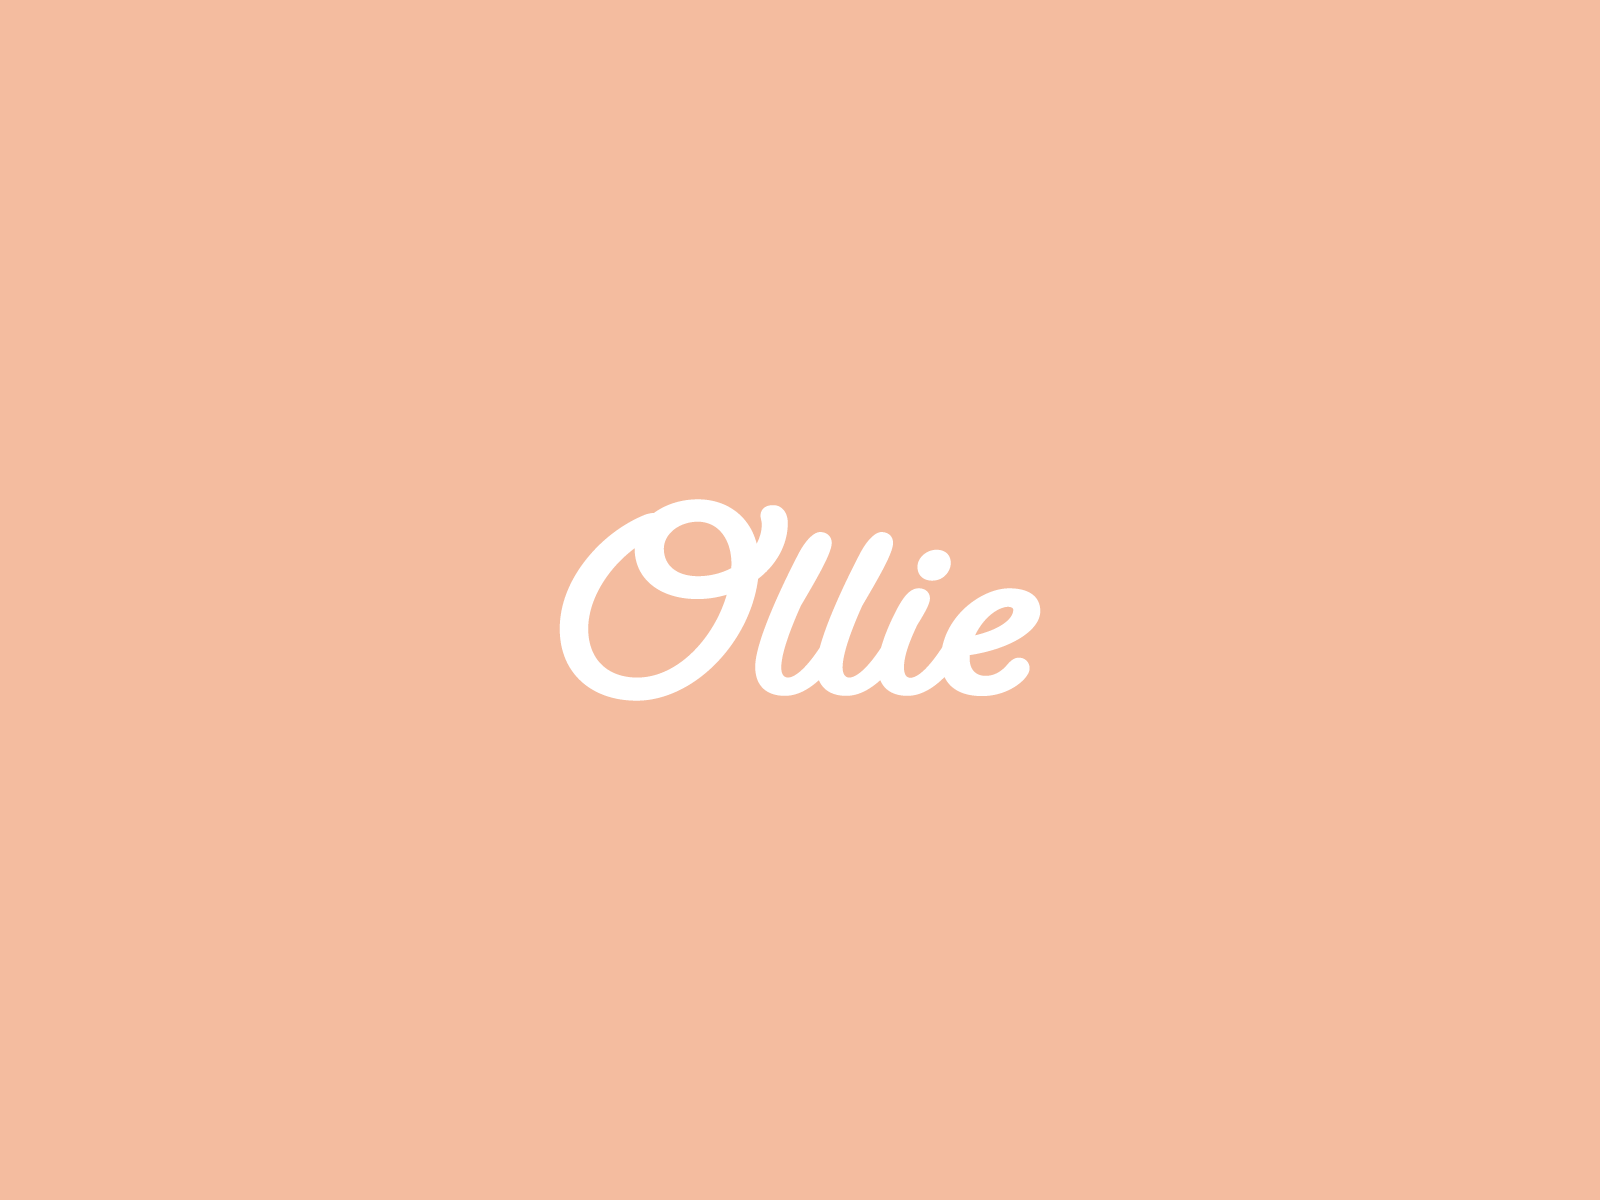 Ollie Logo Concept by Tyler Cowan on Dribbble